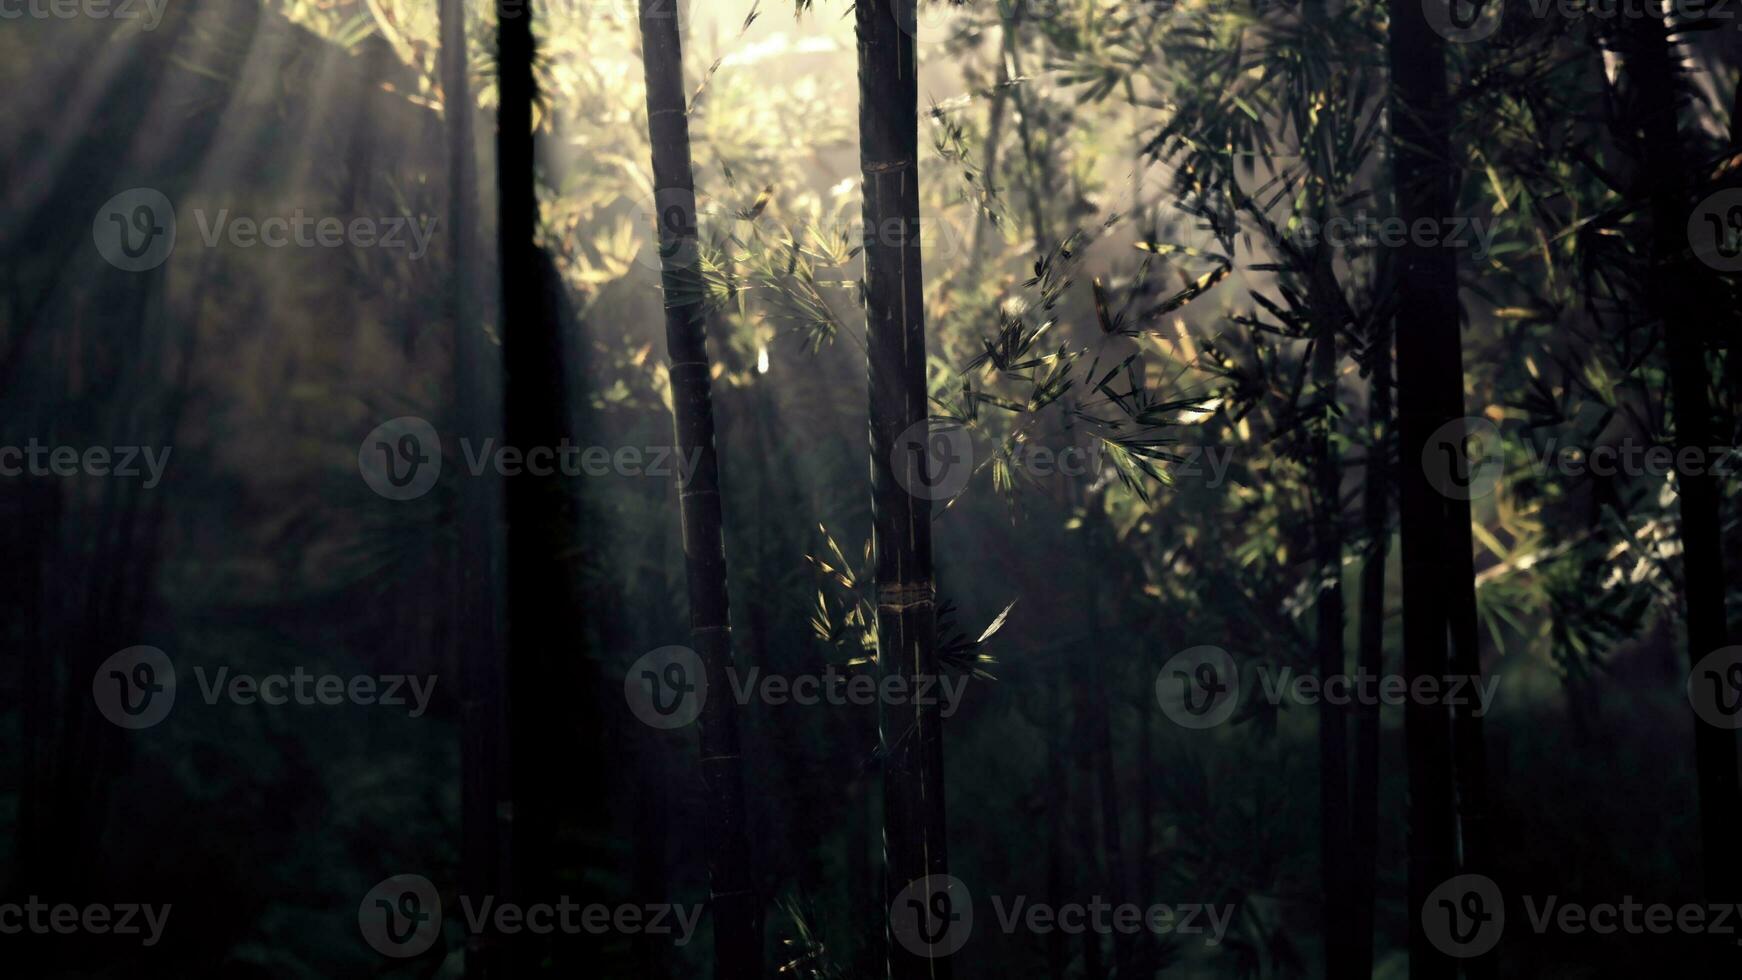 paisaje de bambú árbol en tropical selva foto